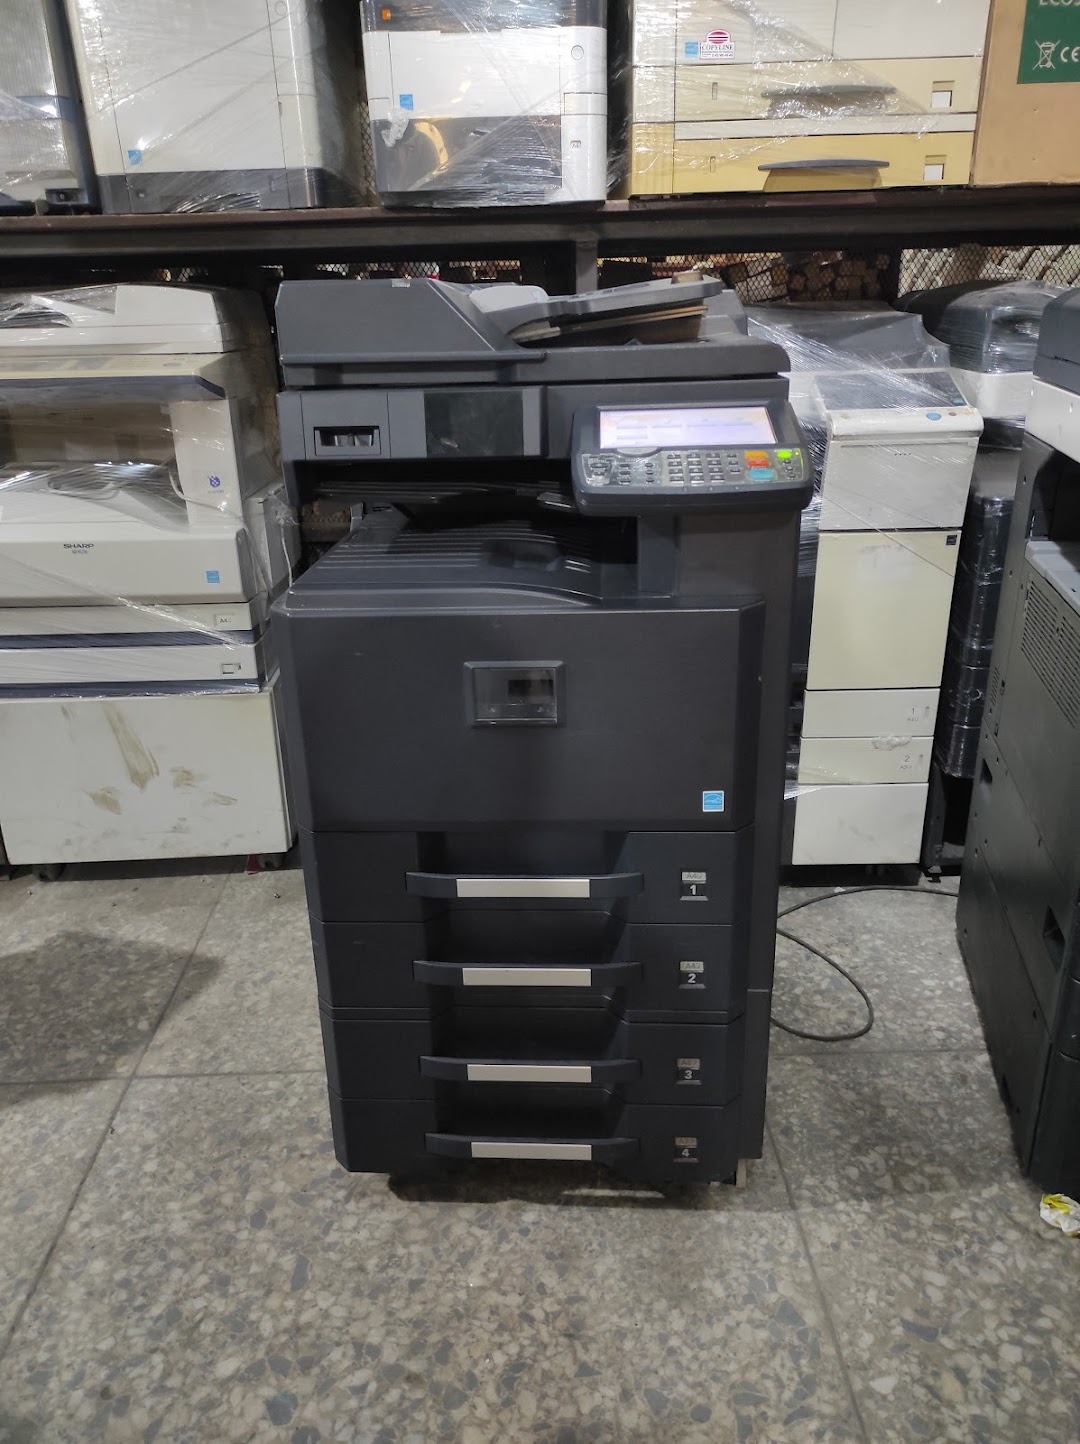 Perfect Equipment Ltd. (Perfect House) Printing Equipment Di Printer Printer Repair Service Printer Dealer in Lagos, Nigeria